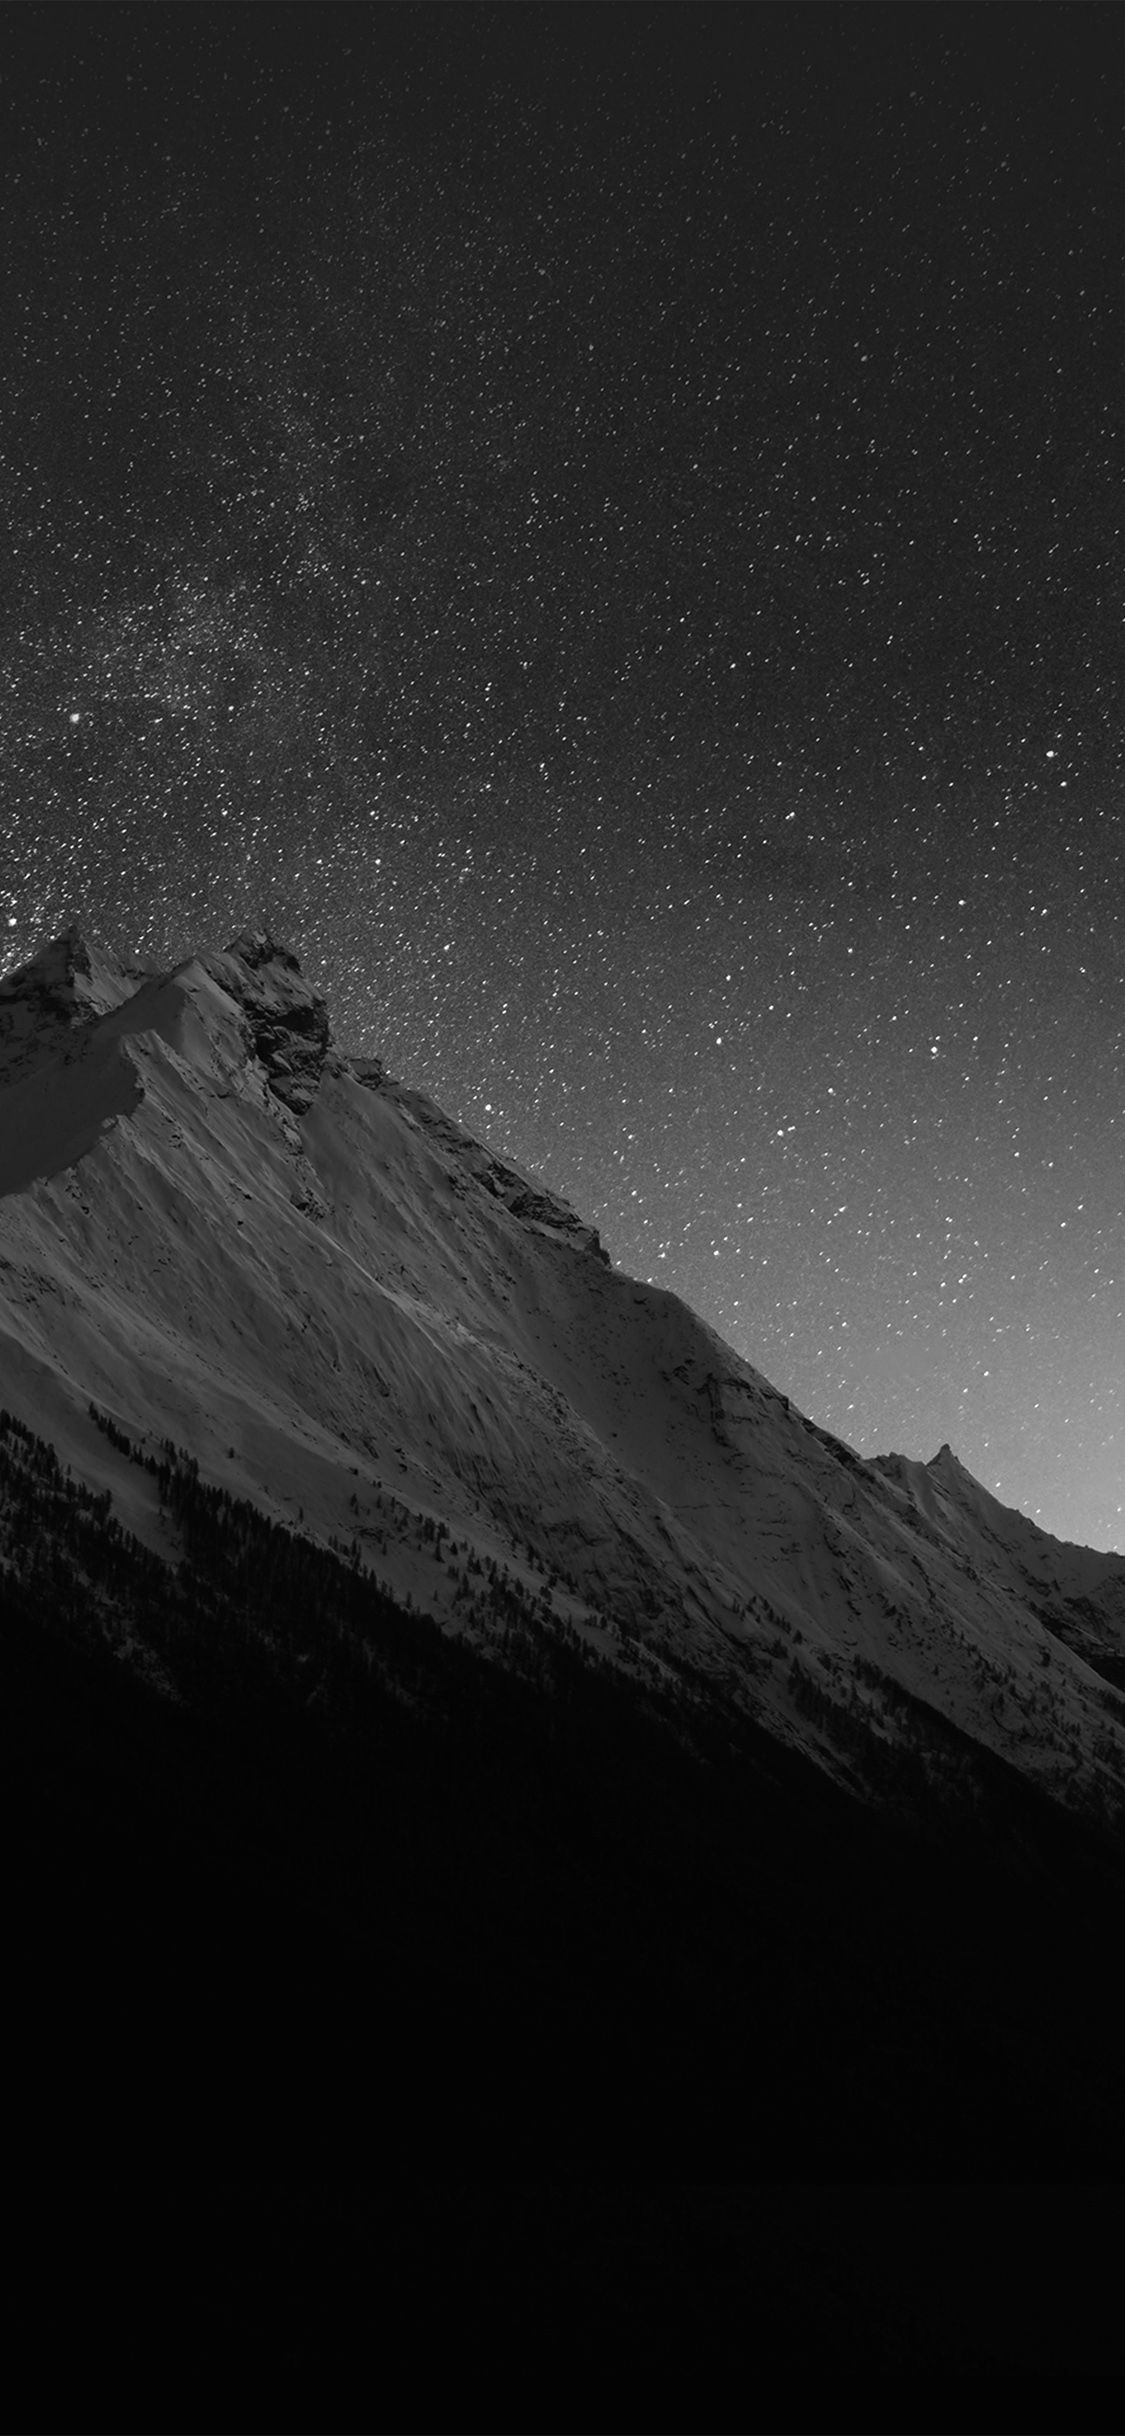 iPhone X wallpaper. mountain night snow